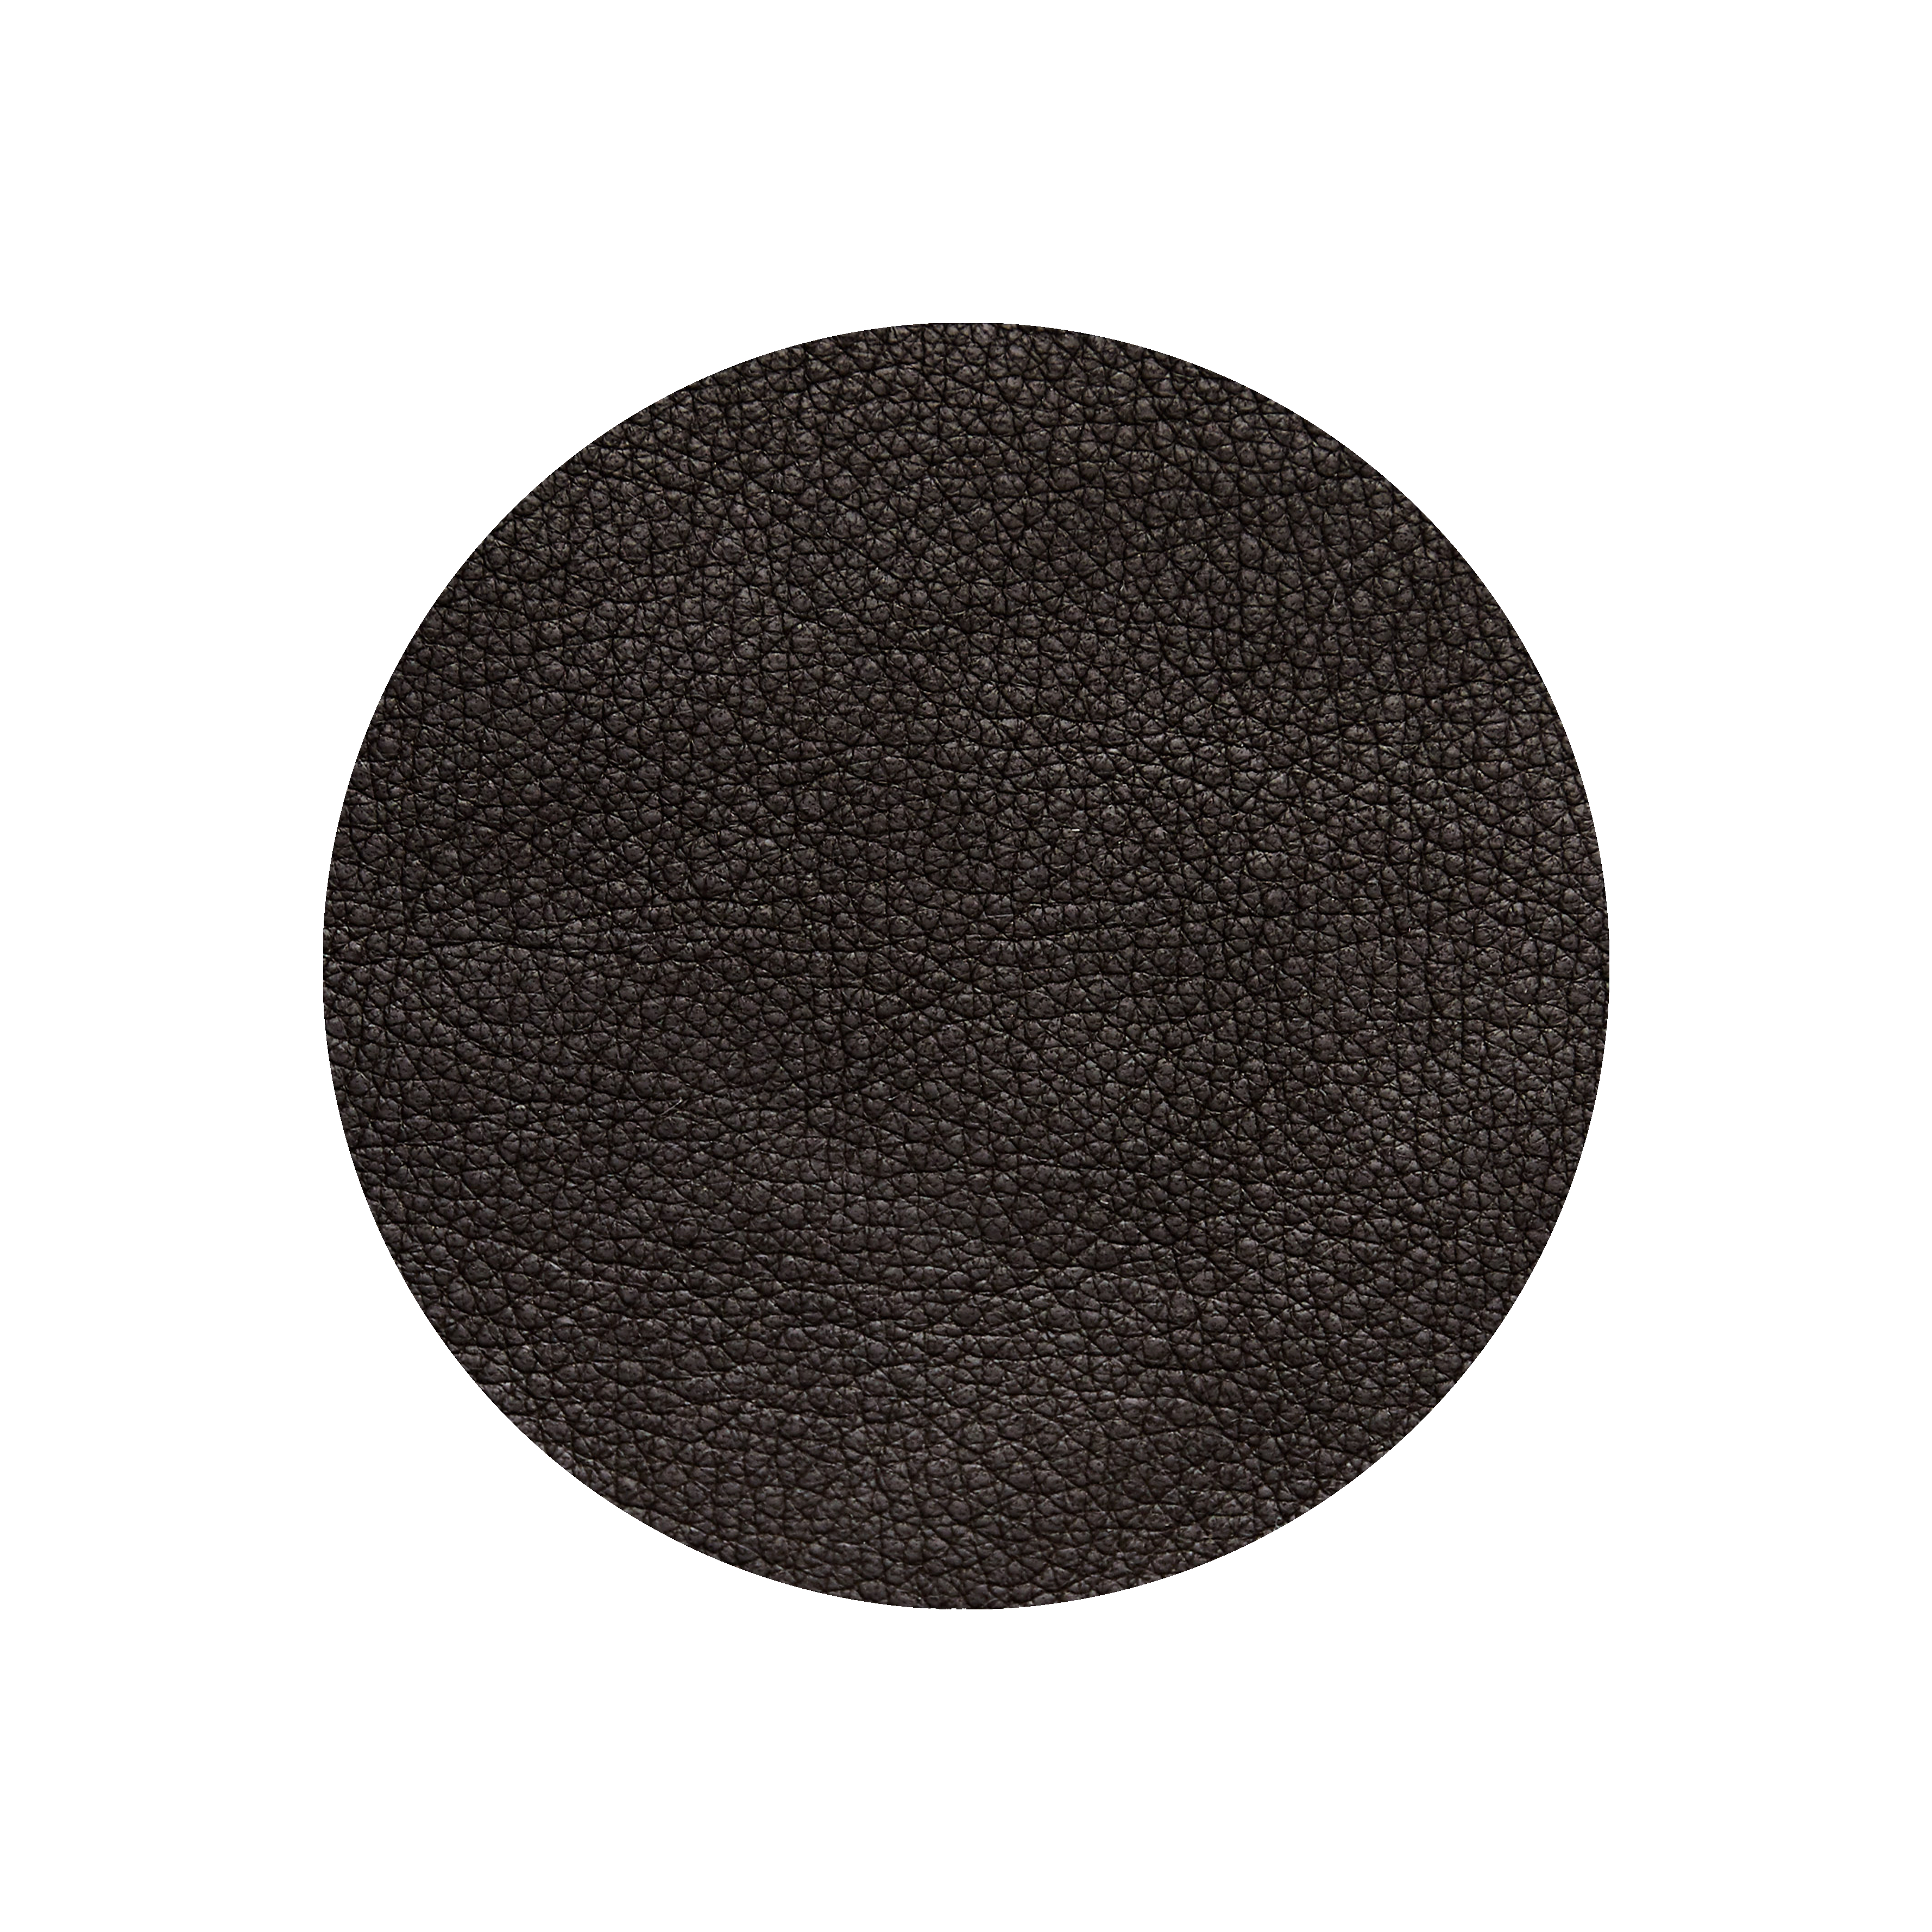 Ojai Leather - Black